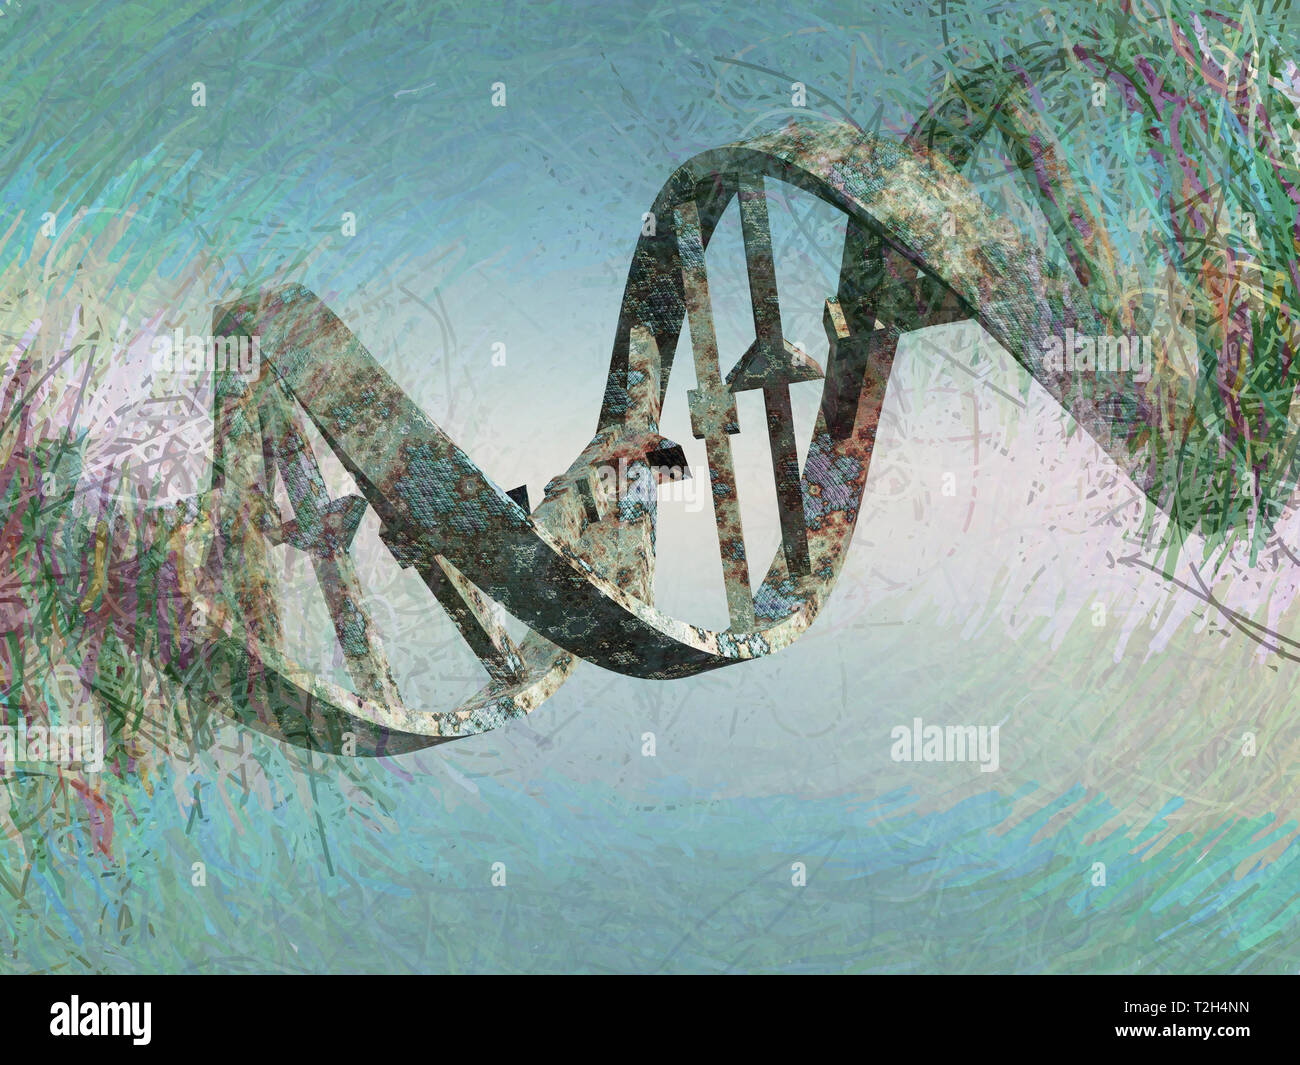 Damaged chromosome hi-res stock photography and images - Alamy